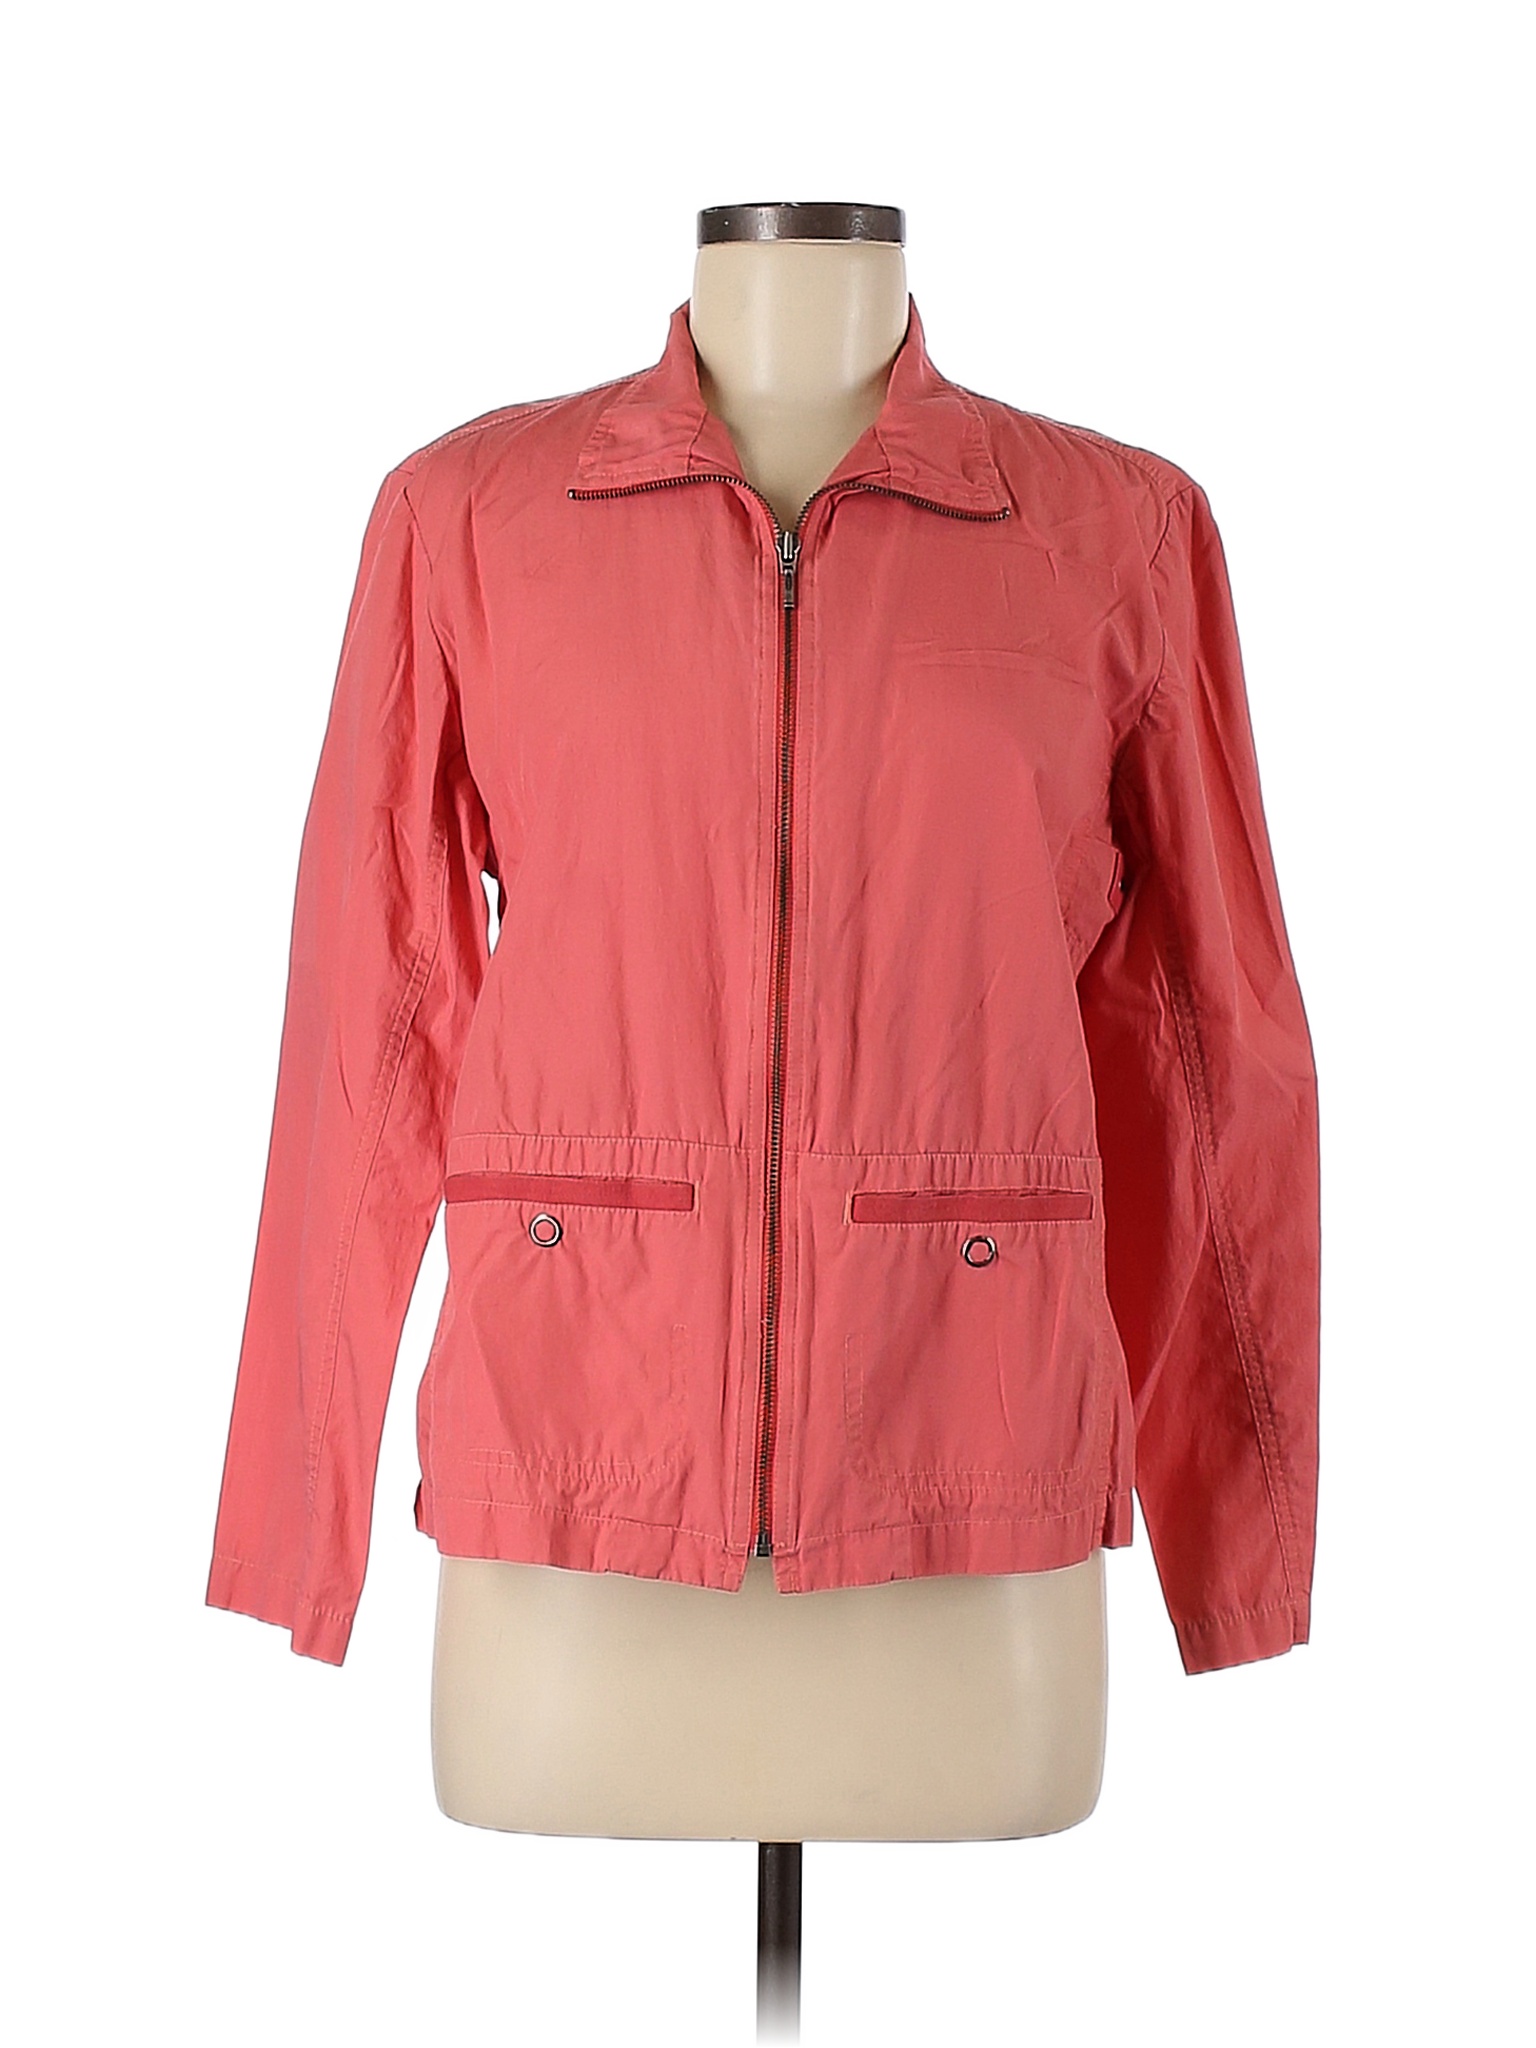 Chico's 100% Cotton Solid Pink Jacket Size Med (1) - 86% off | thredUP